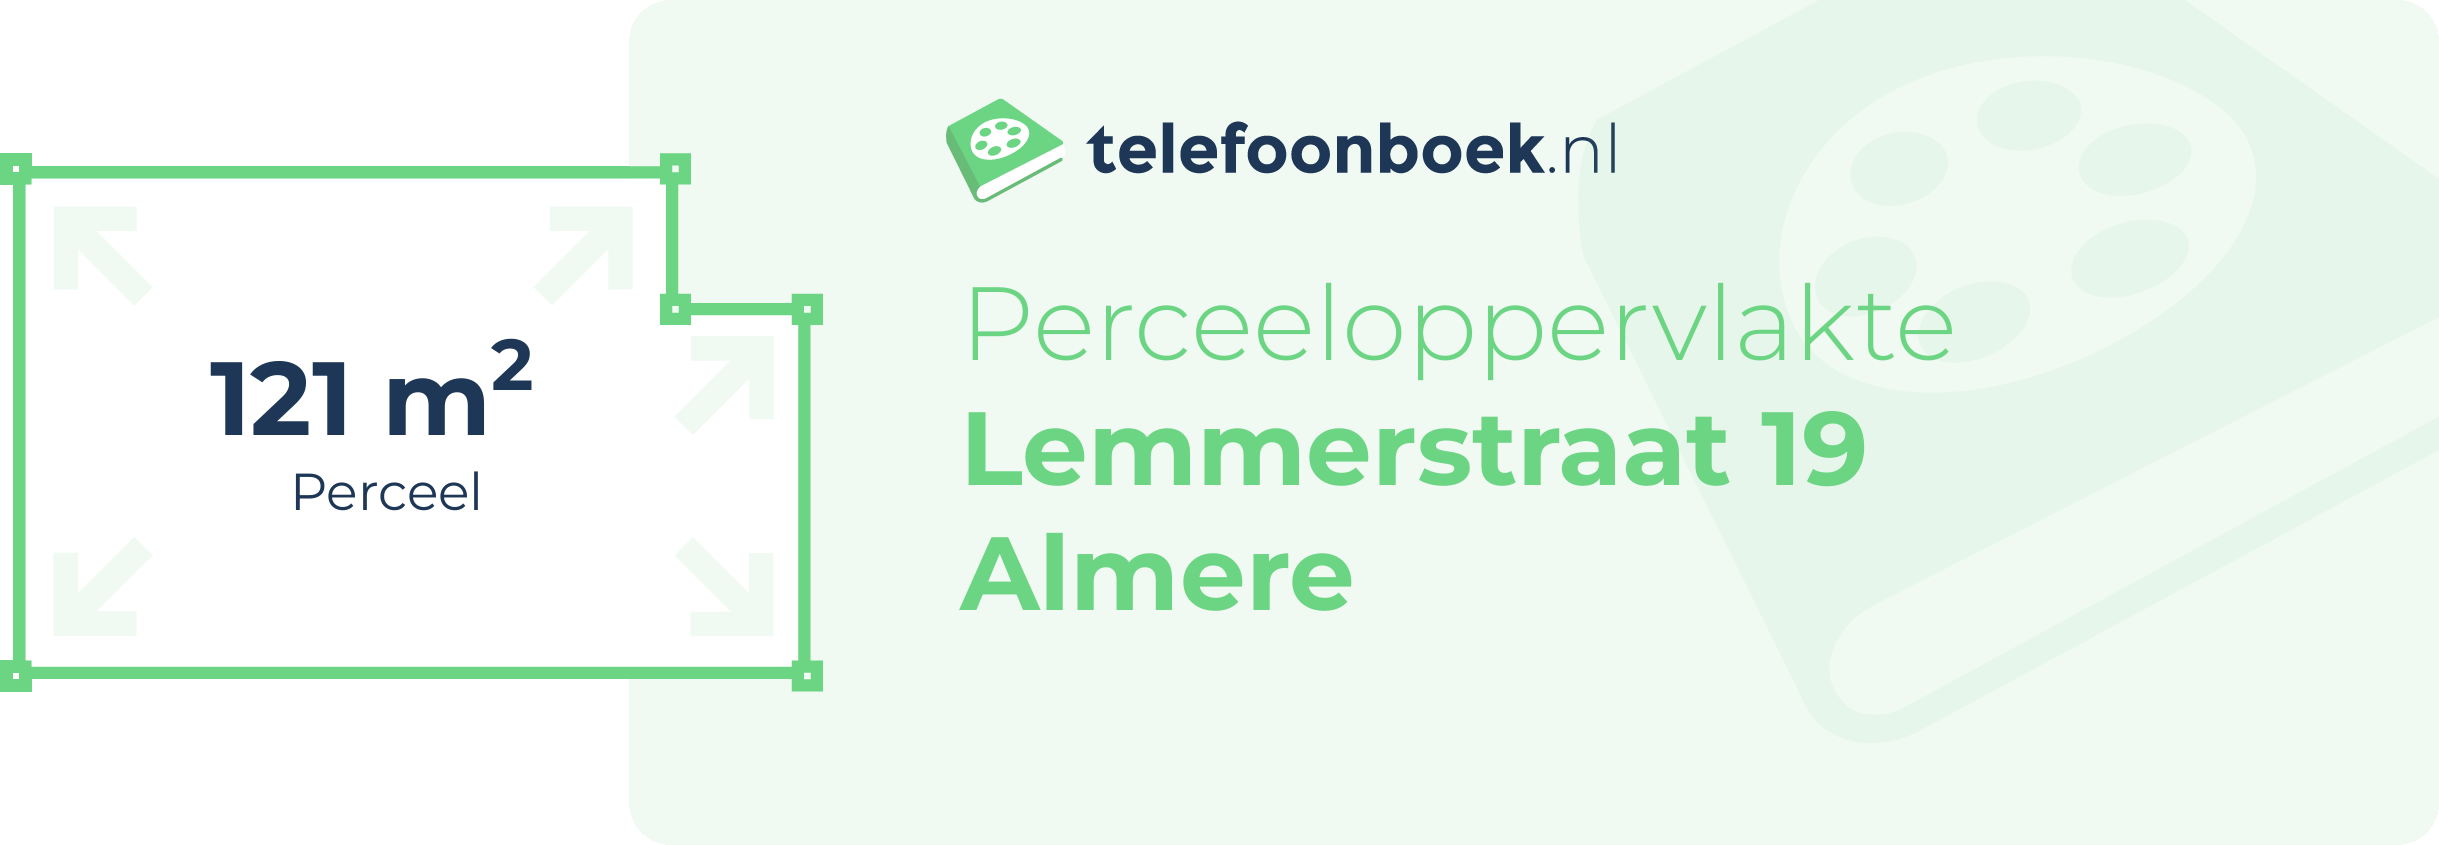 Perceeloppervlakte Lemmerstraat 19 Almere